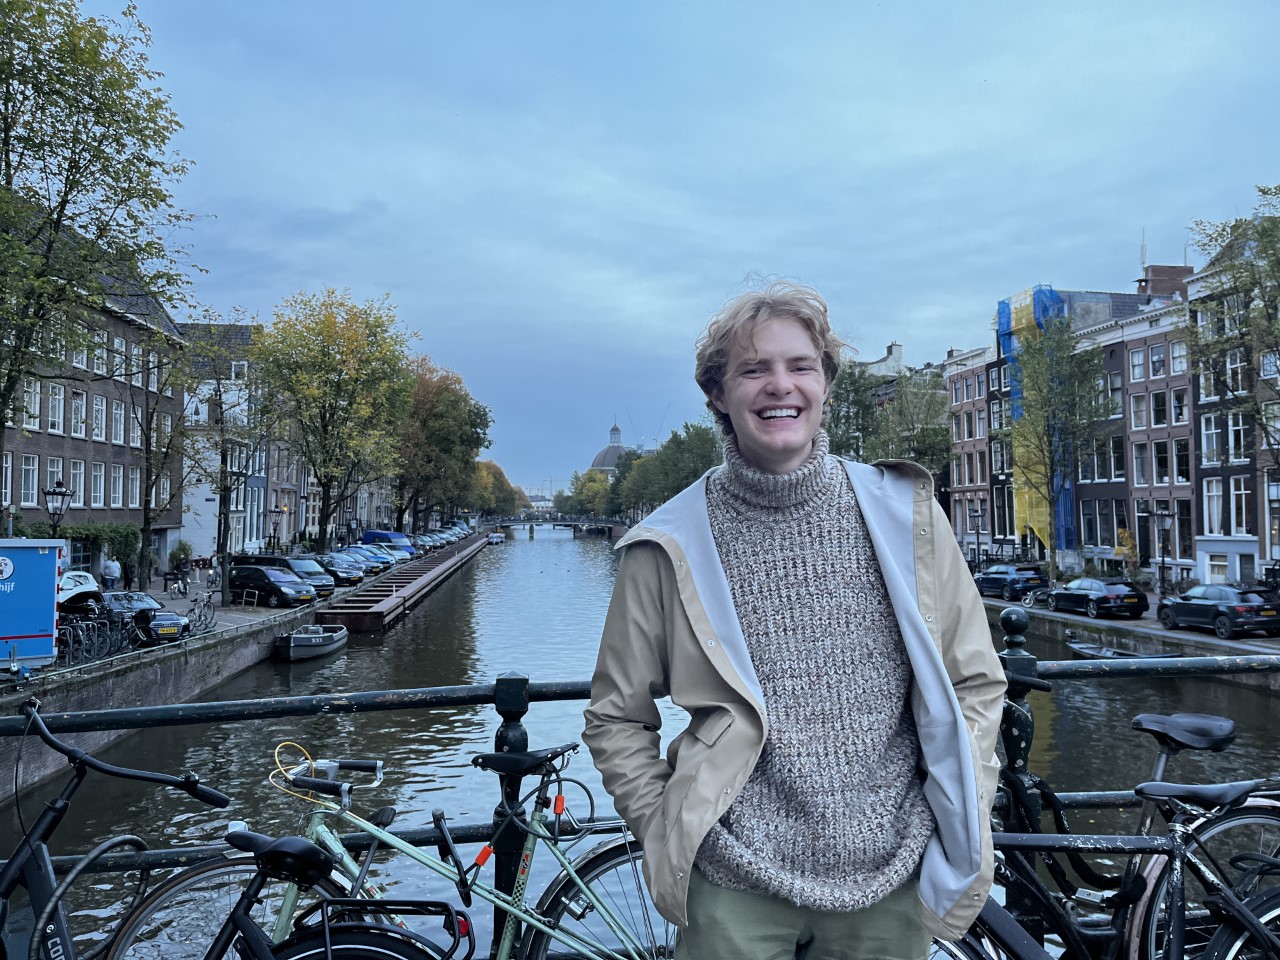 Profile picture of me in Amsterdam!